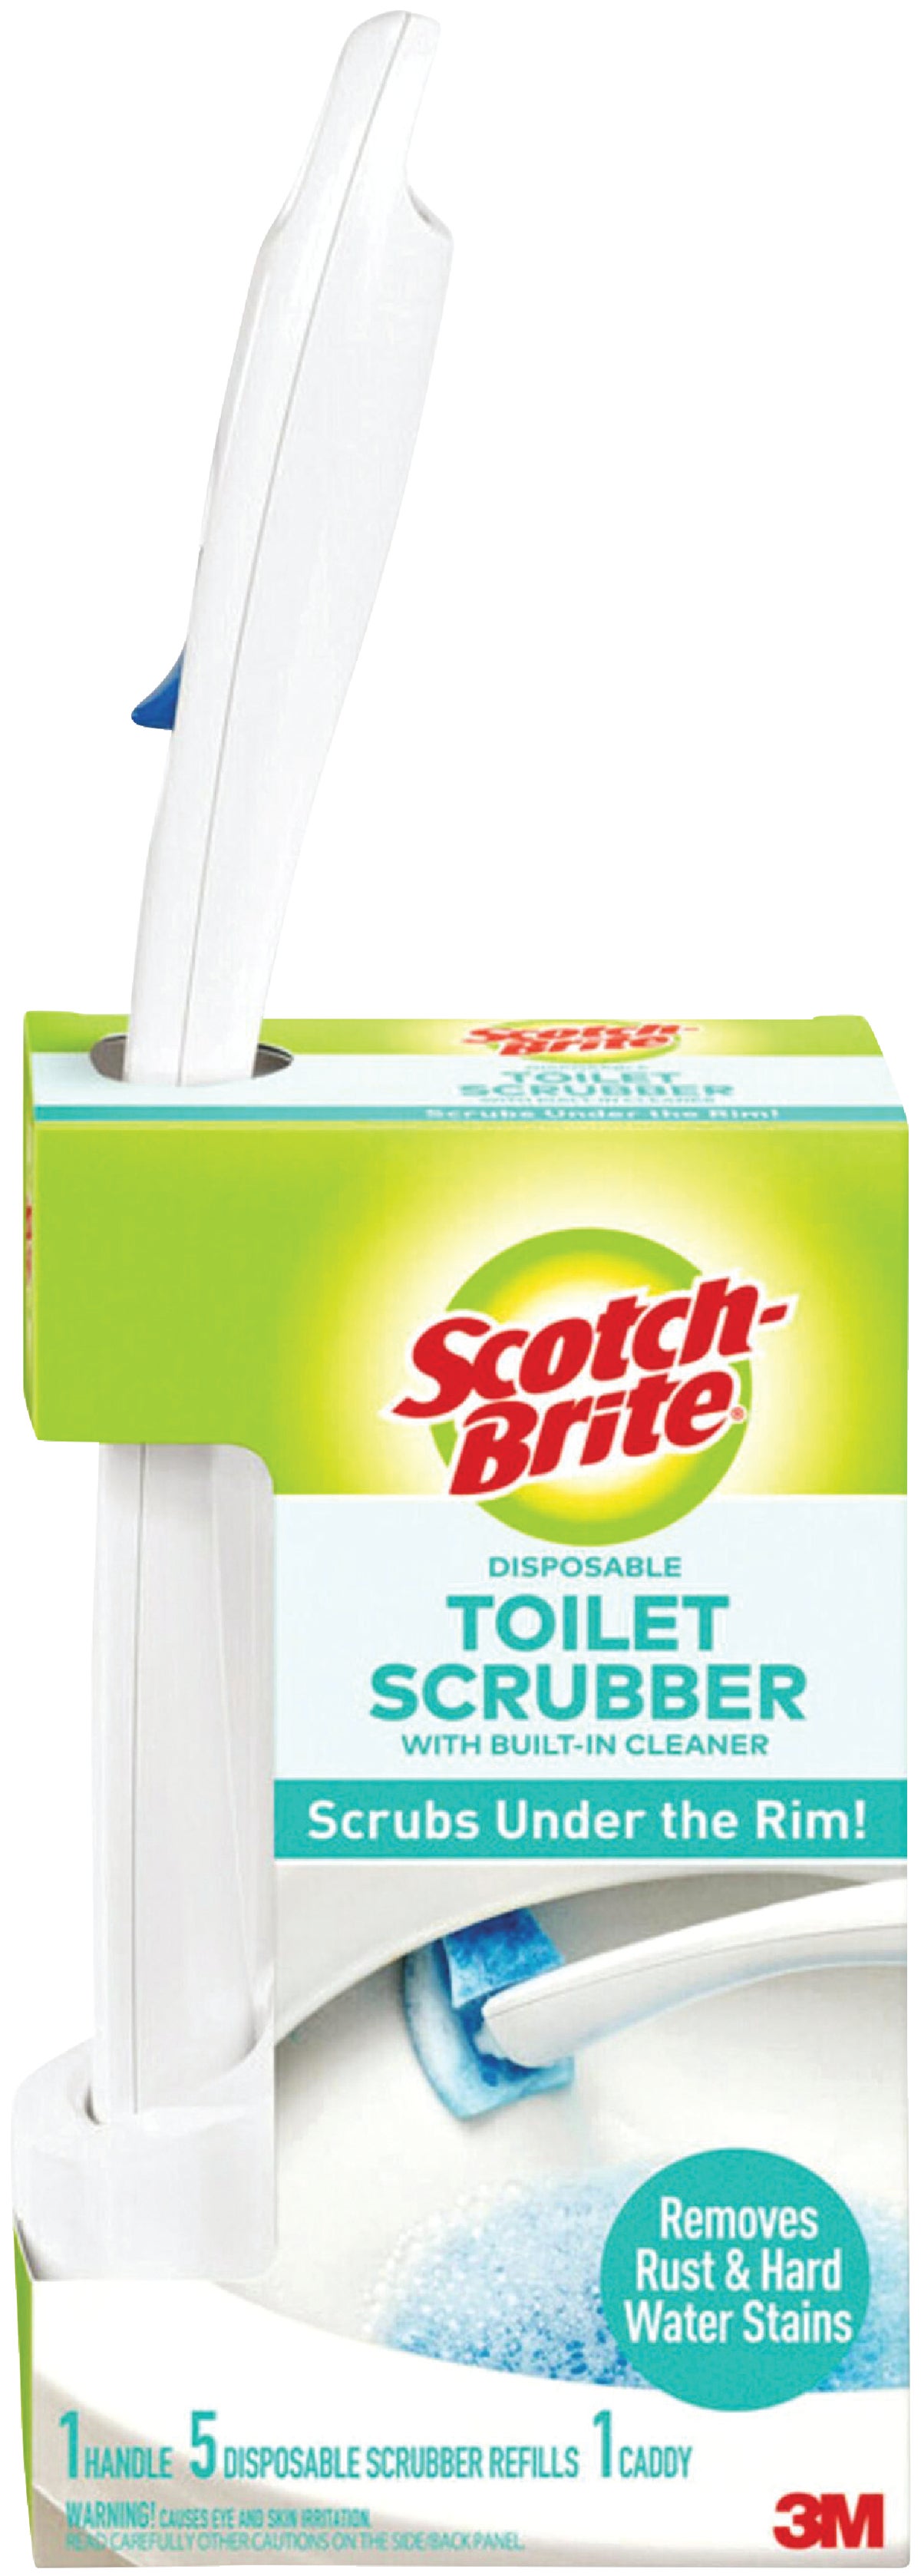 3M Scotch-Brite Disposable Toilet Scrubber